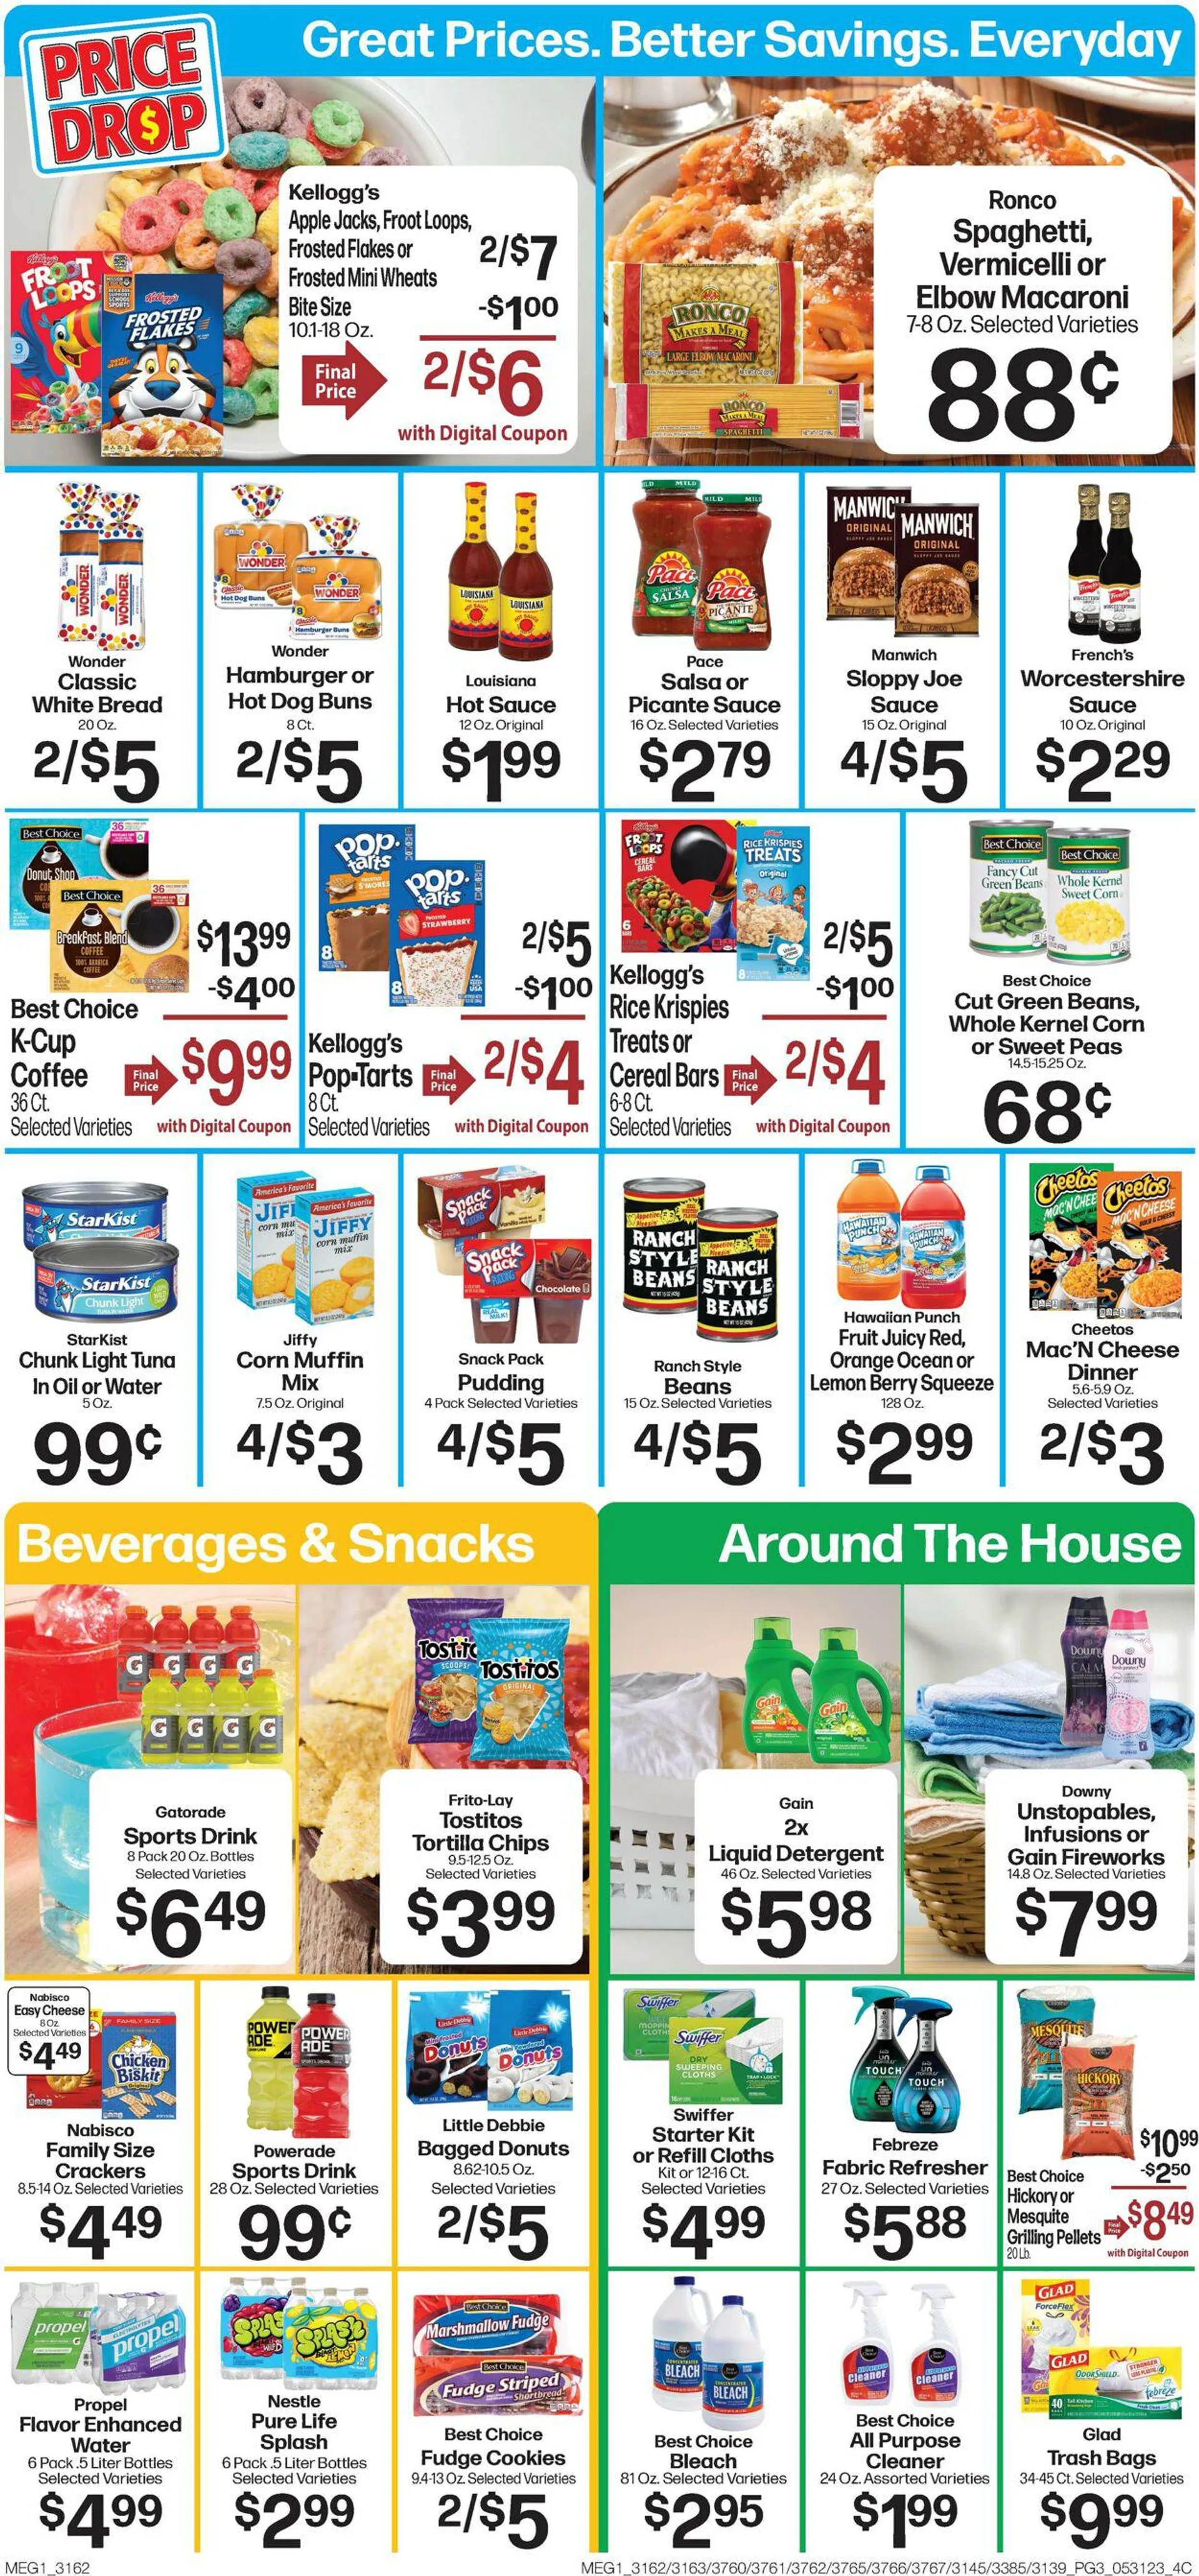 Hays Supermarket Current weekly ad - 2